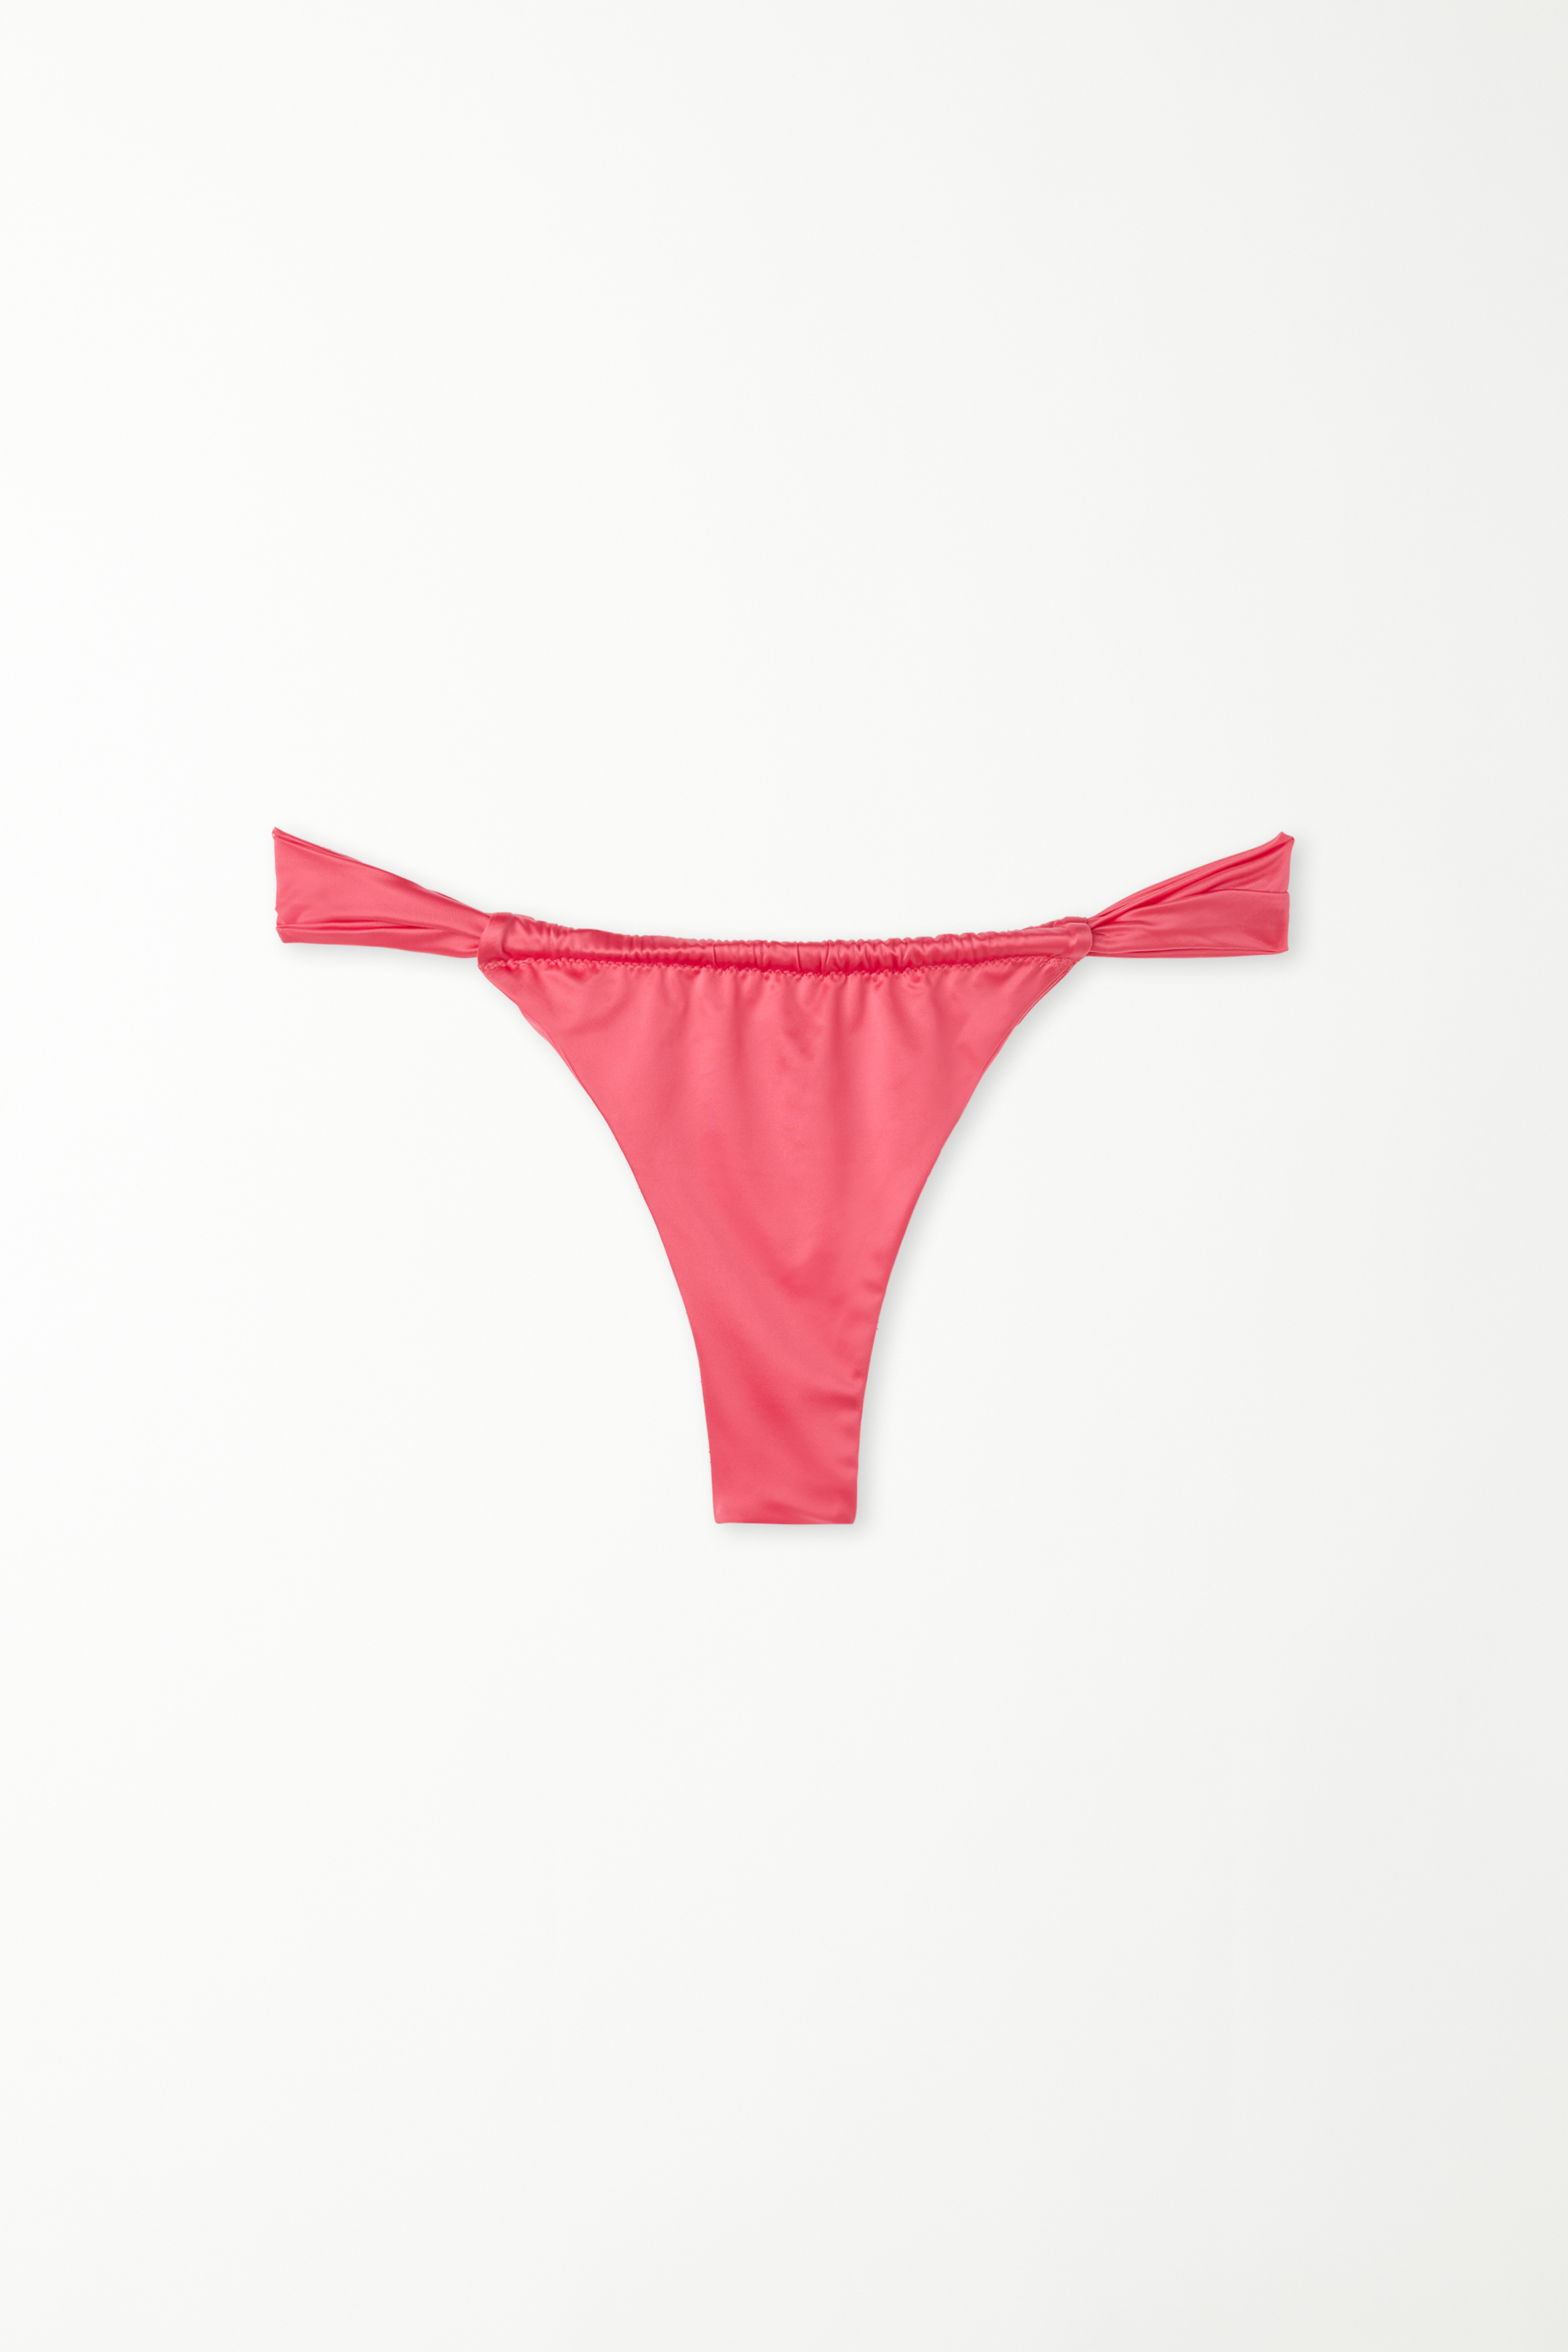 Shiny Summer Pink Sliding Brazilian Bikini Bottom